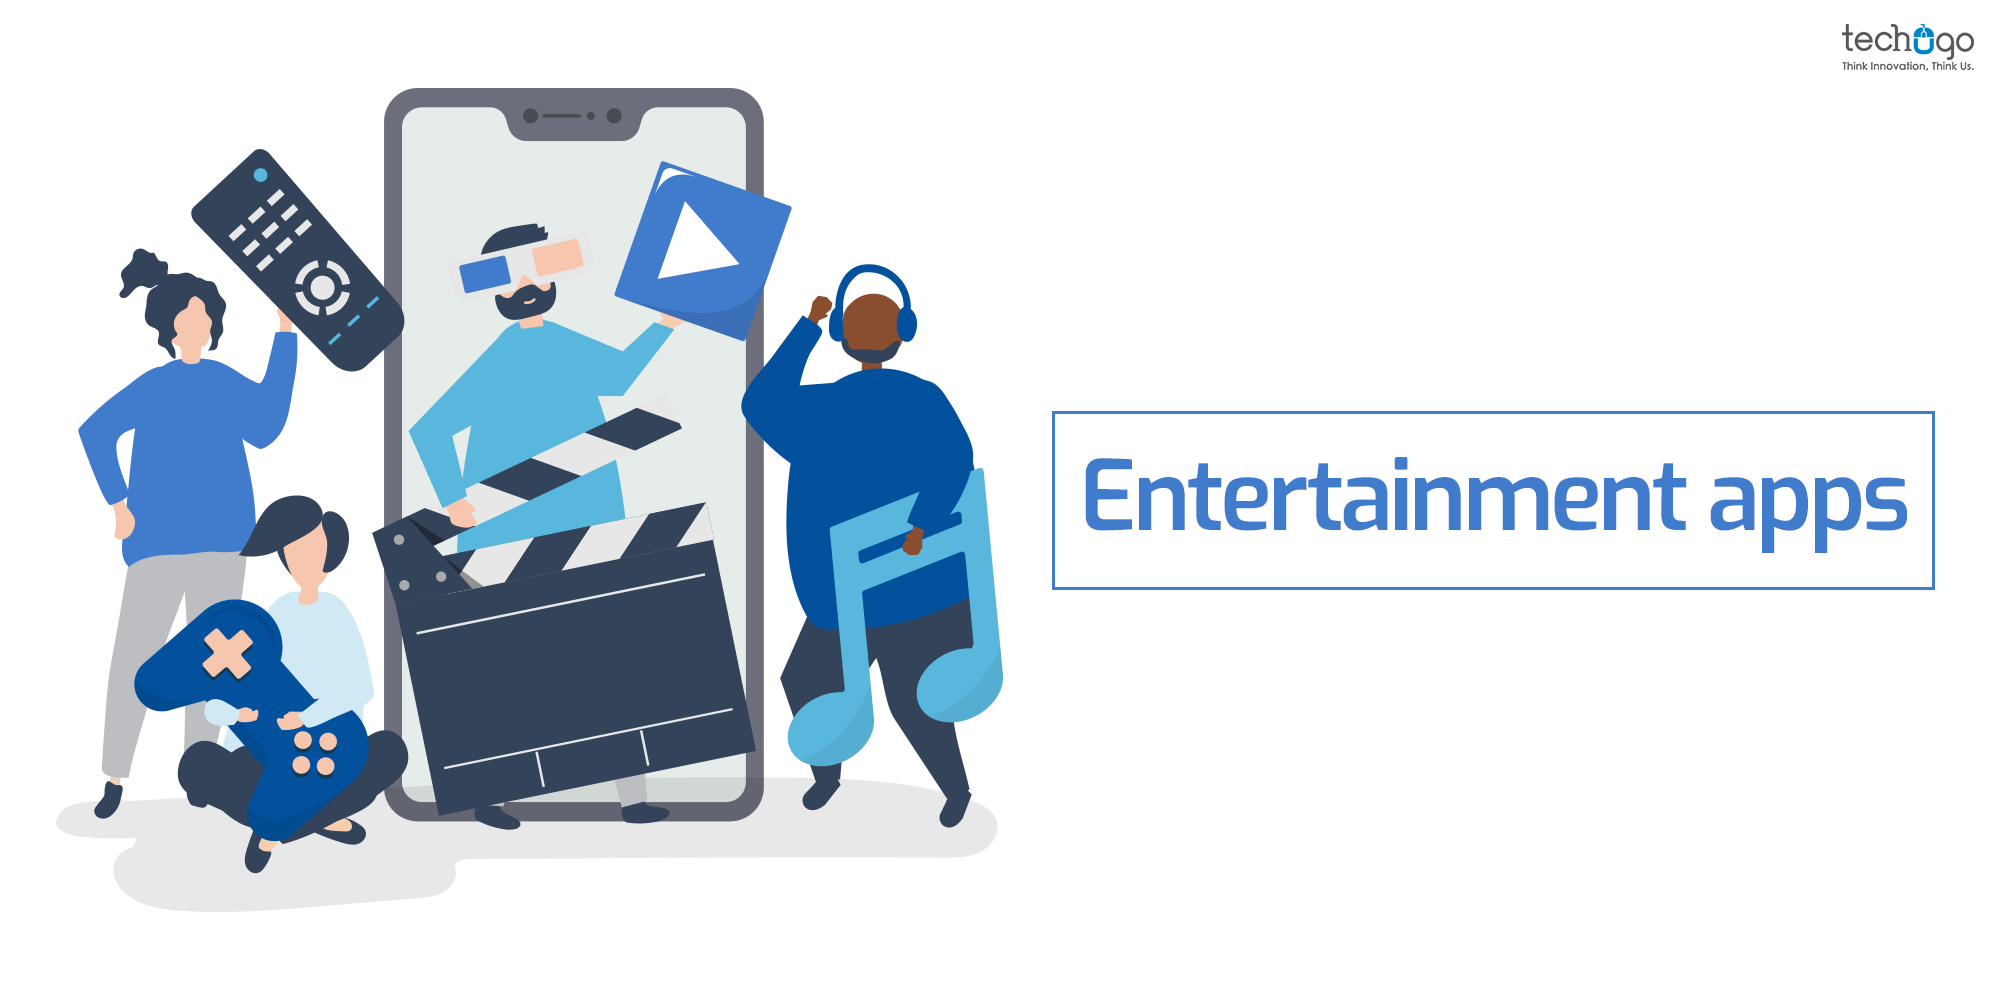 Entertainment apps